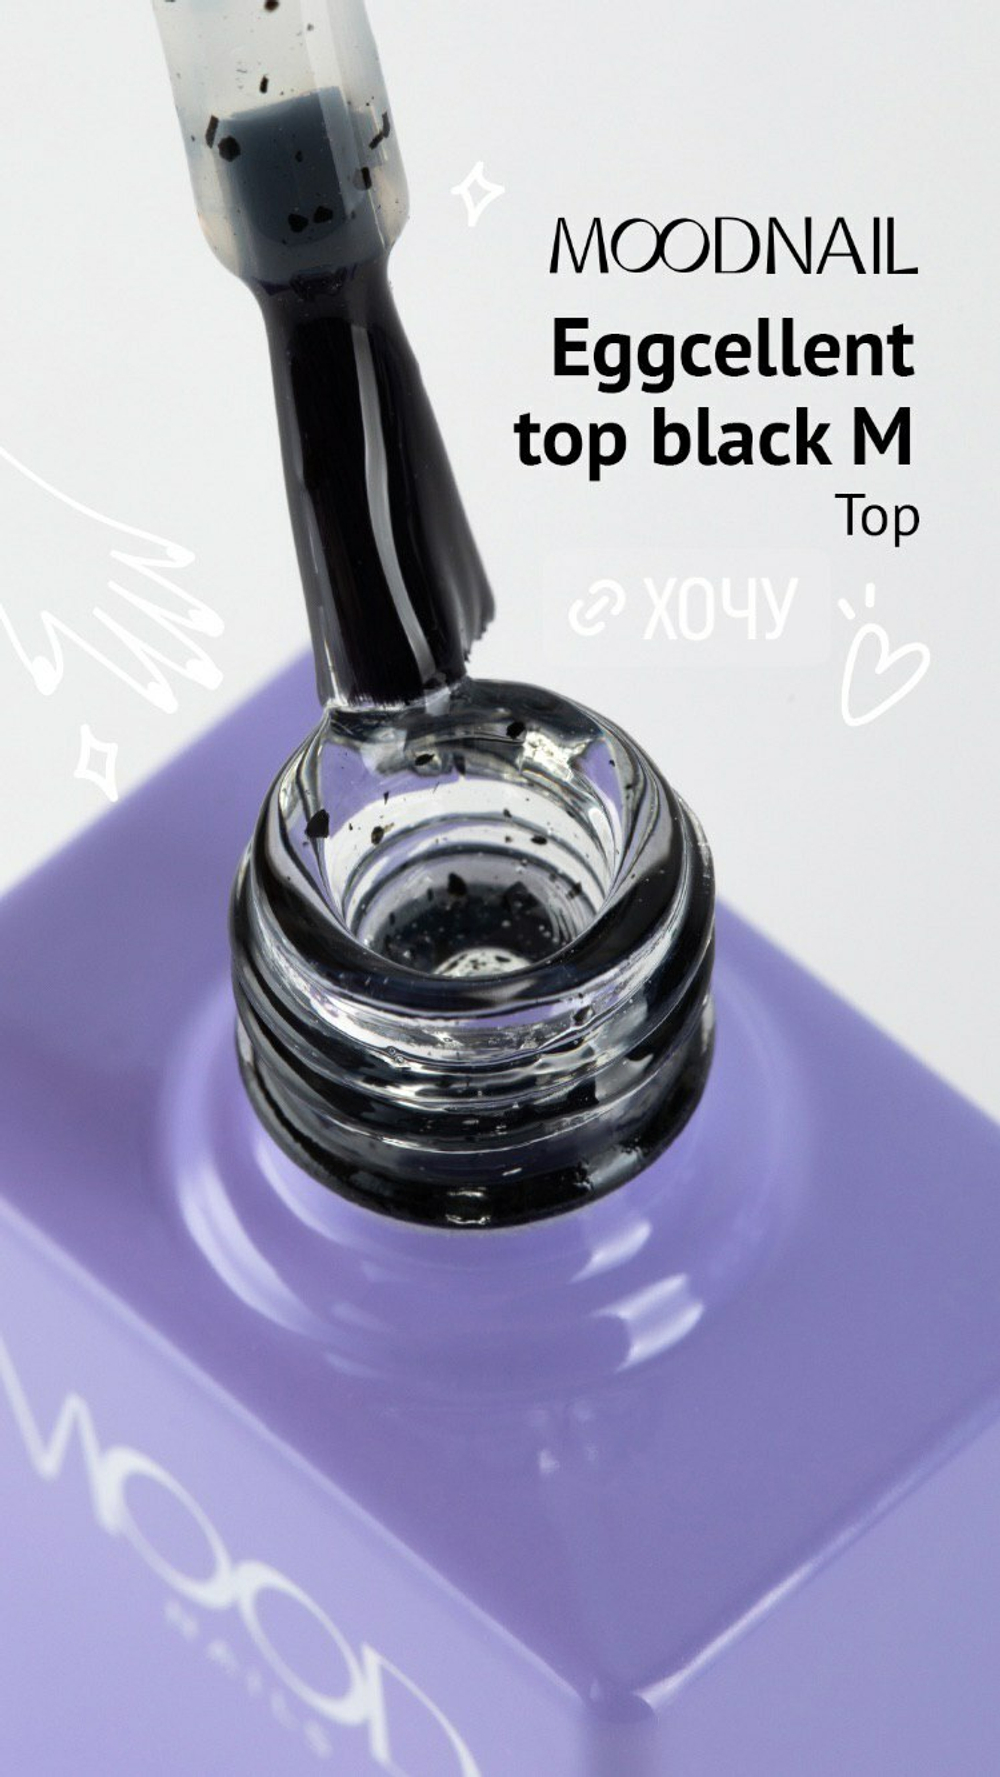 MOODNAIL Top Eggcellent black M, 10g